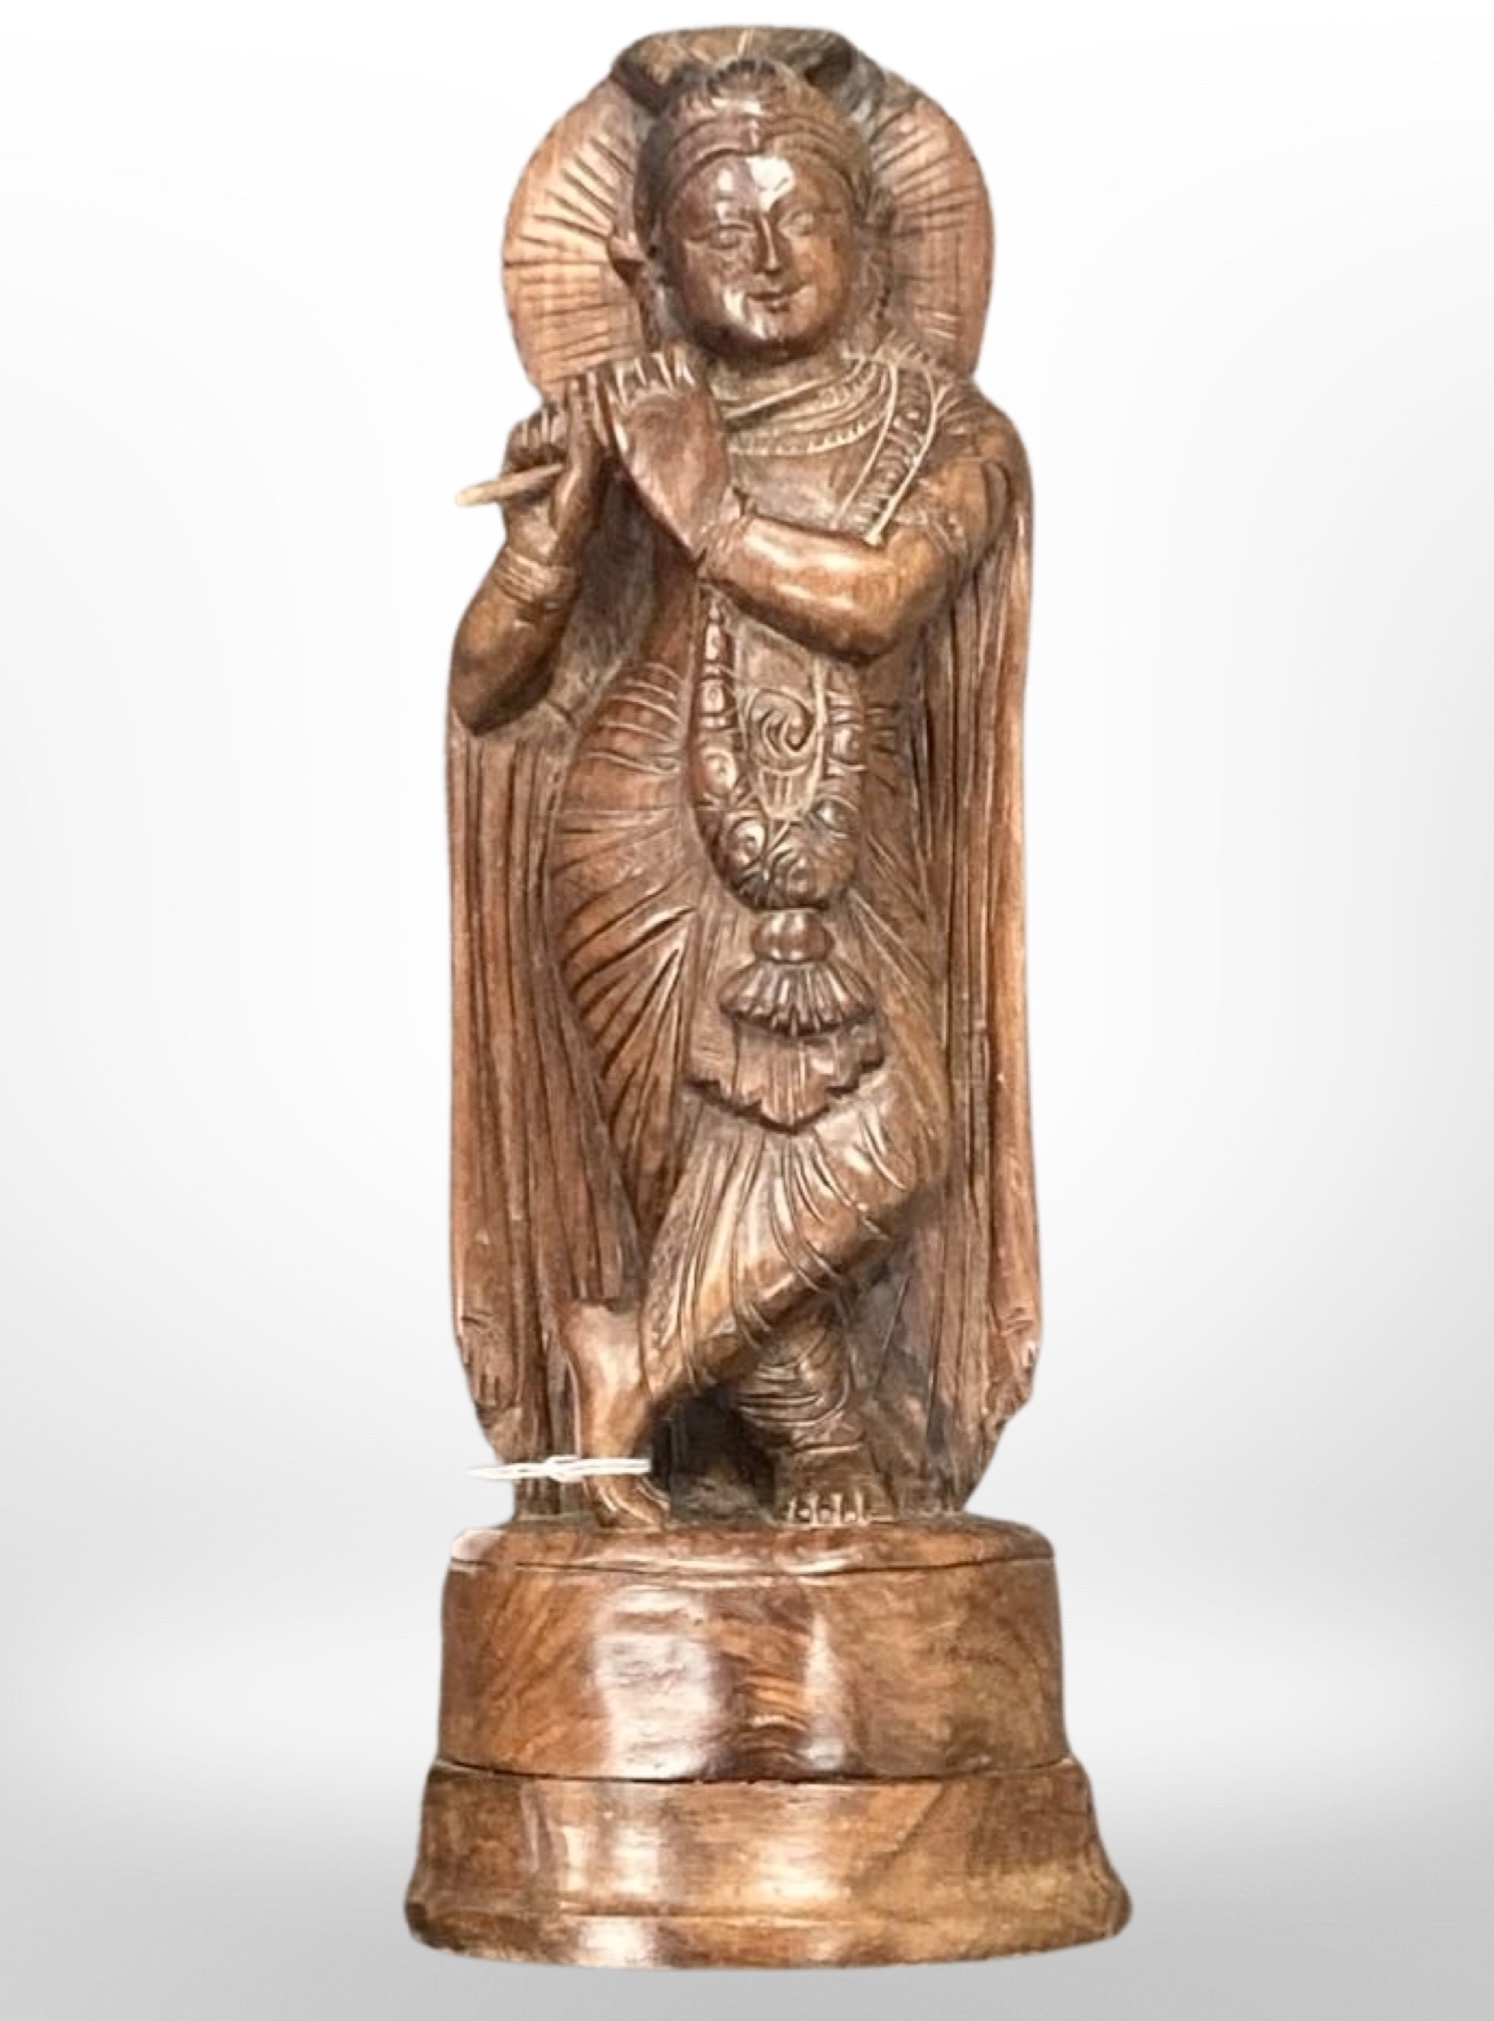 A finely carved hardwood figure of the Hindu god Krishna,